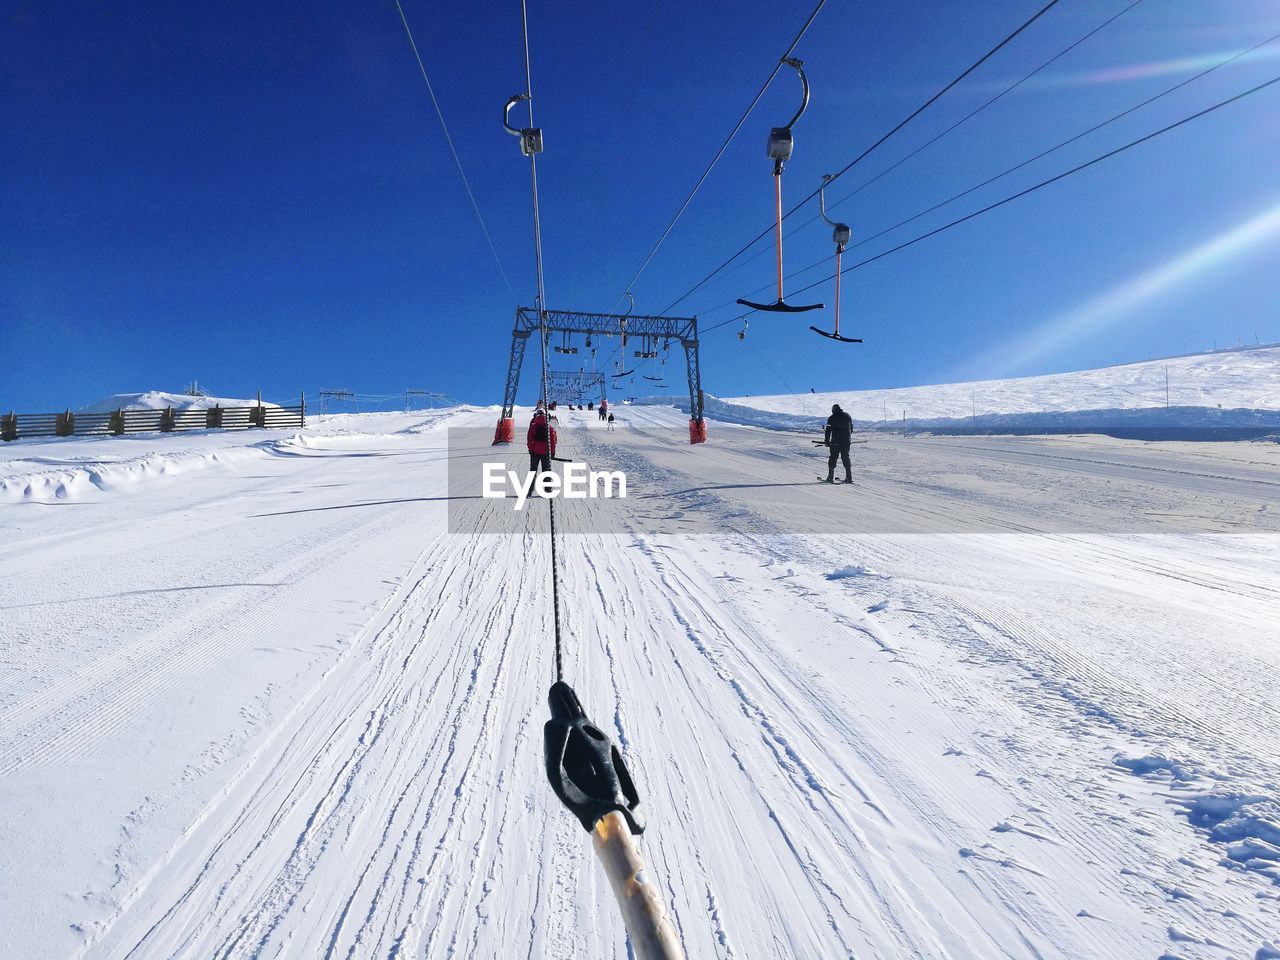 People skiing on snow against blue sky